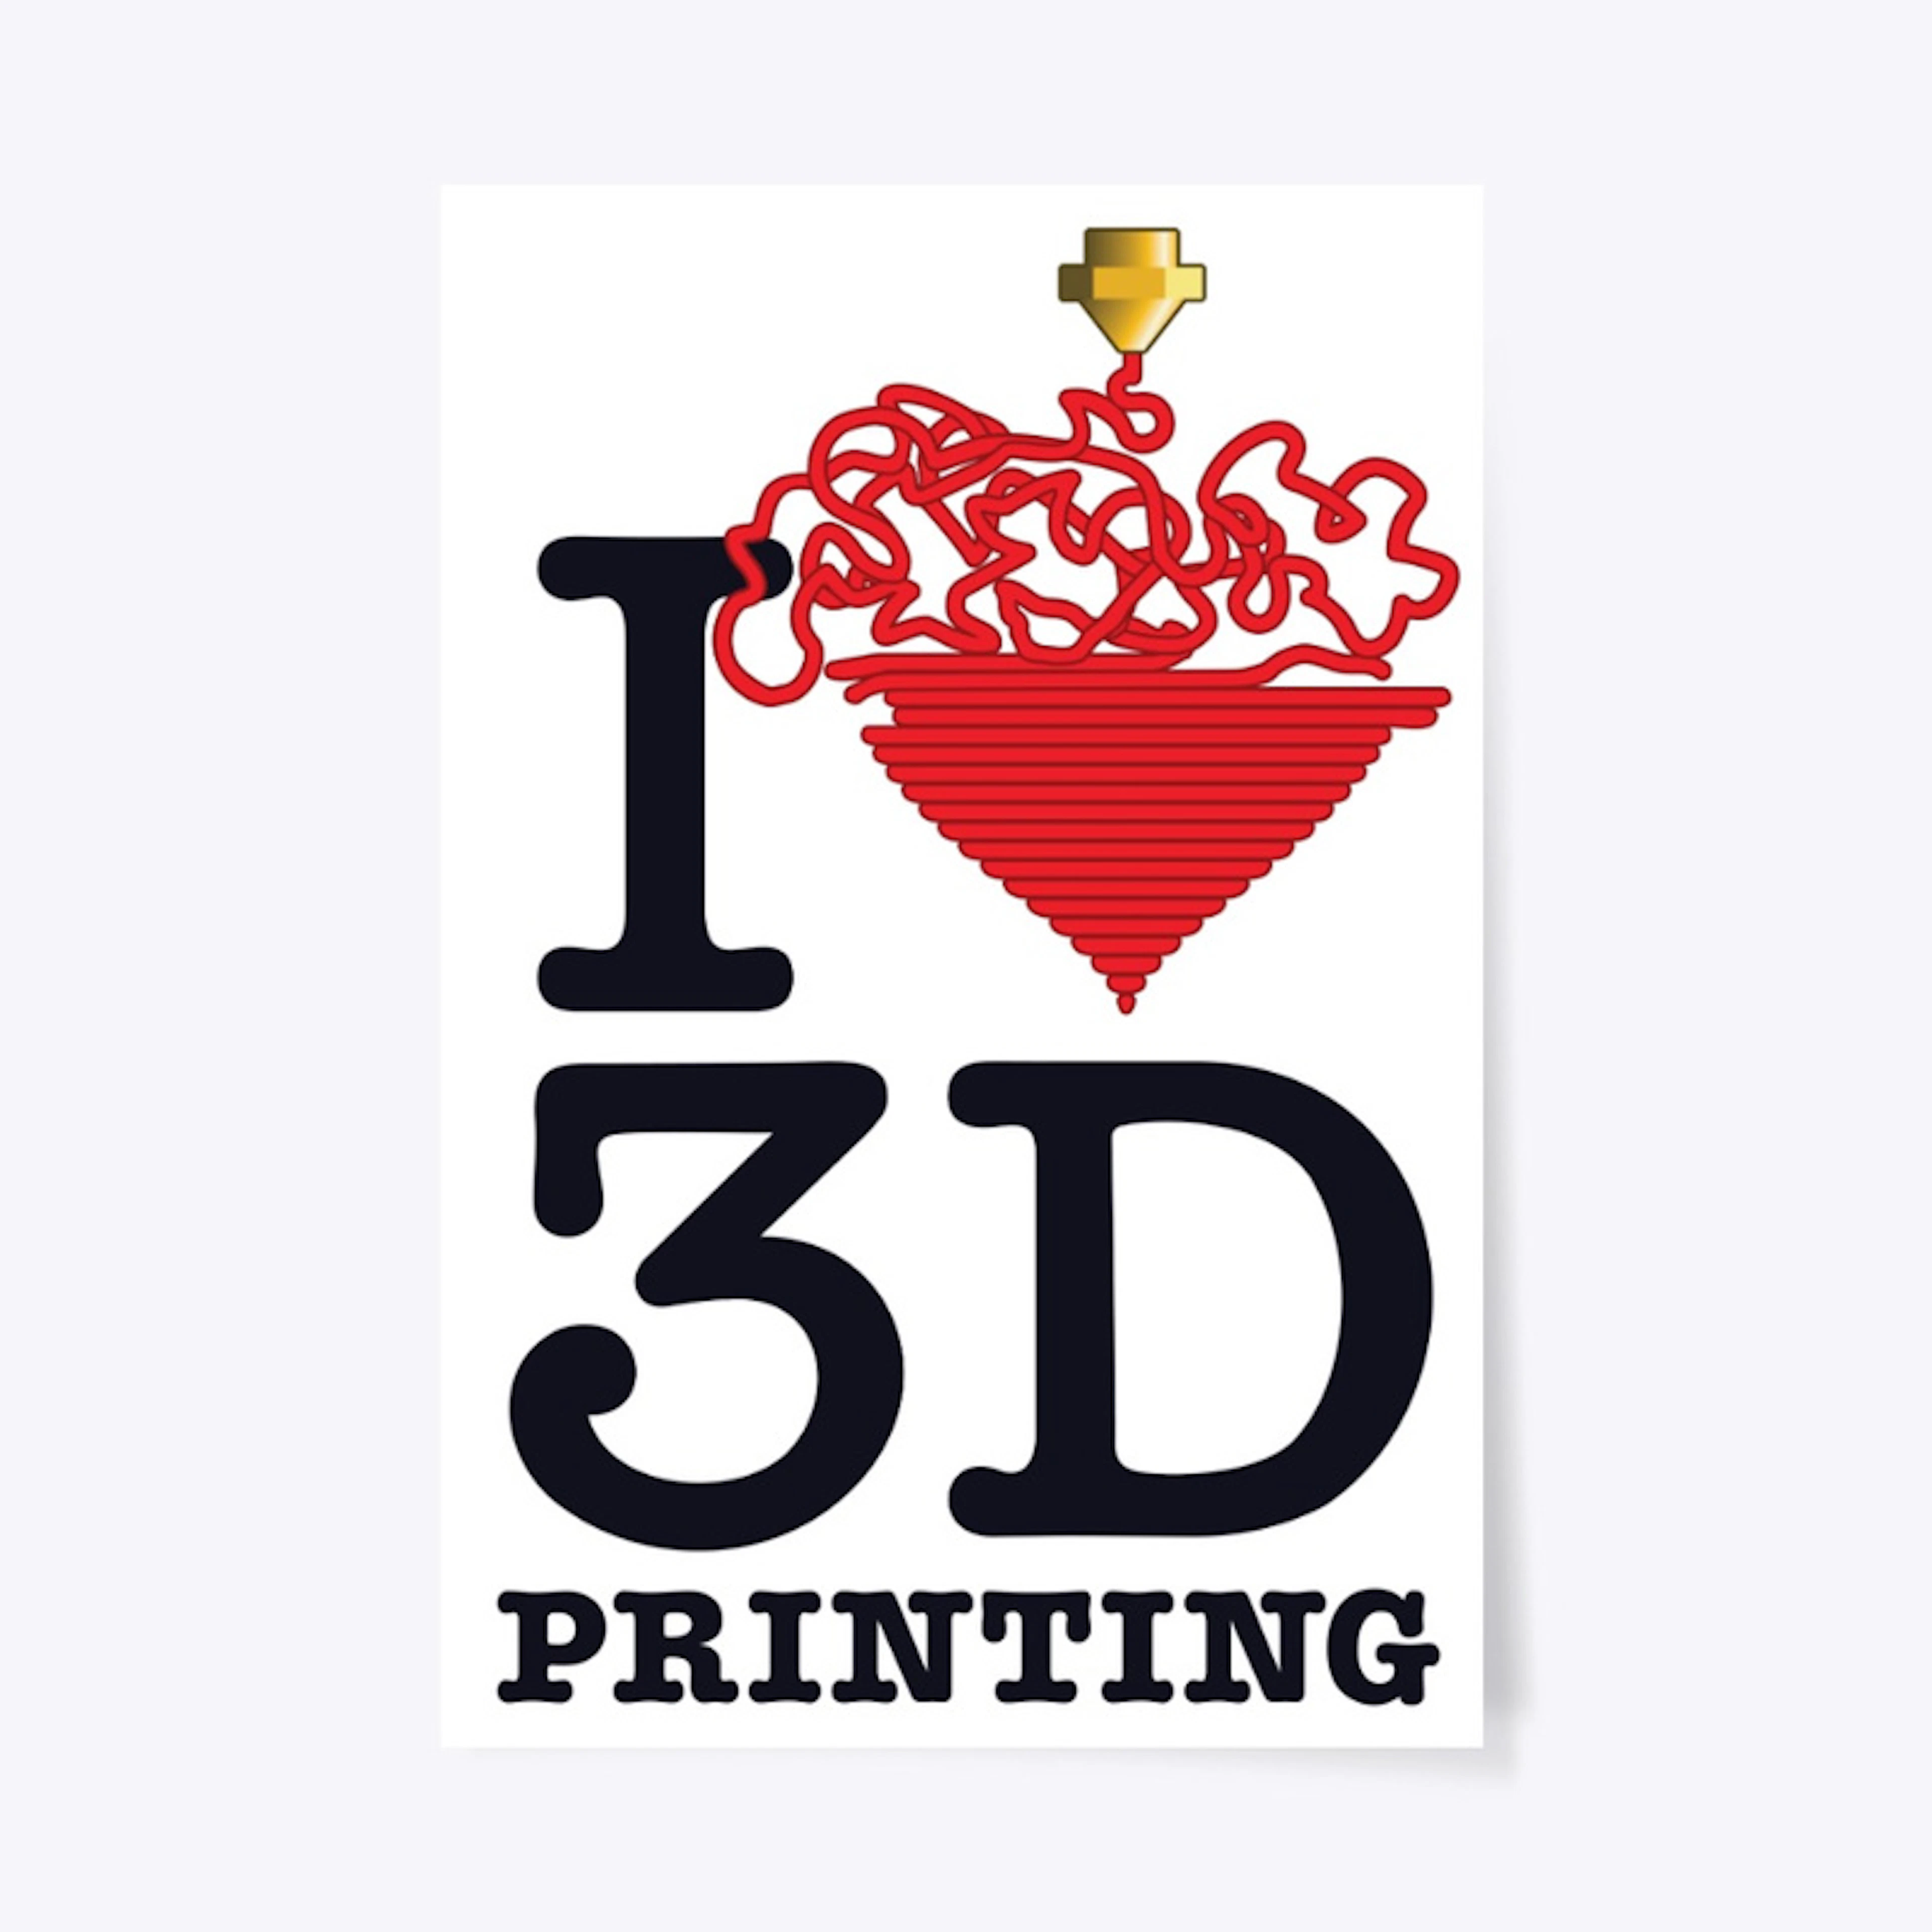 I ❤️ 3D PRINTING